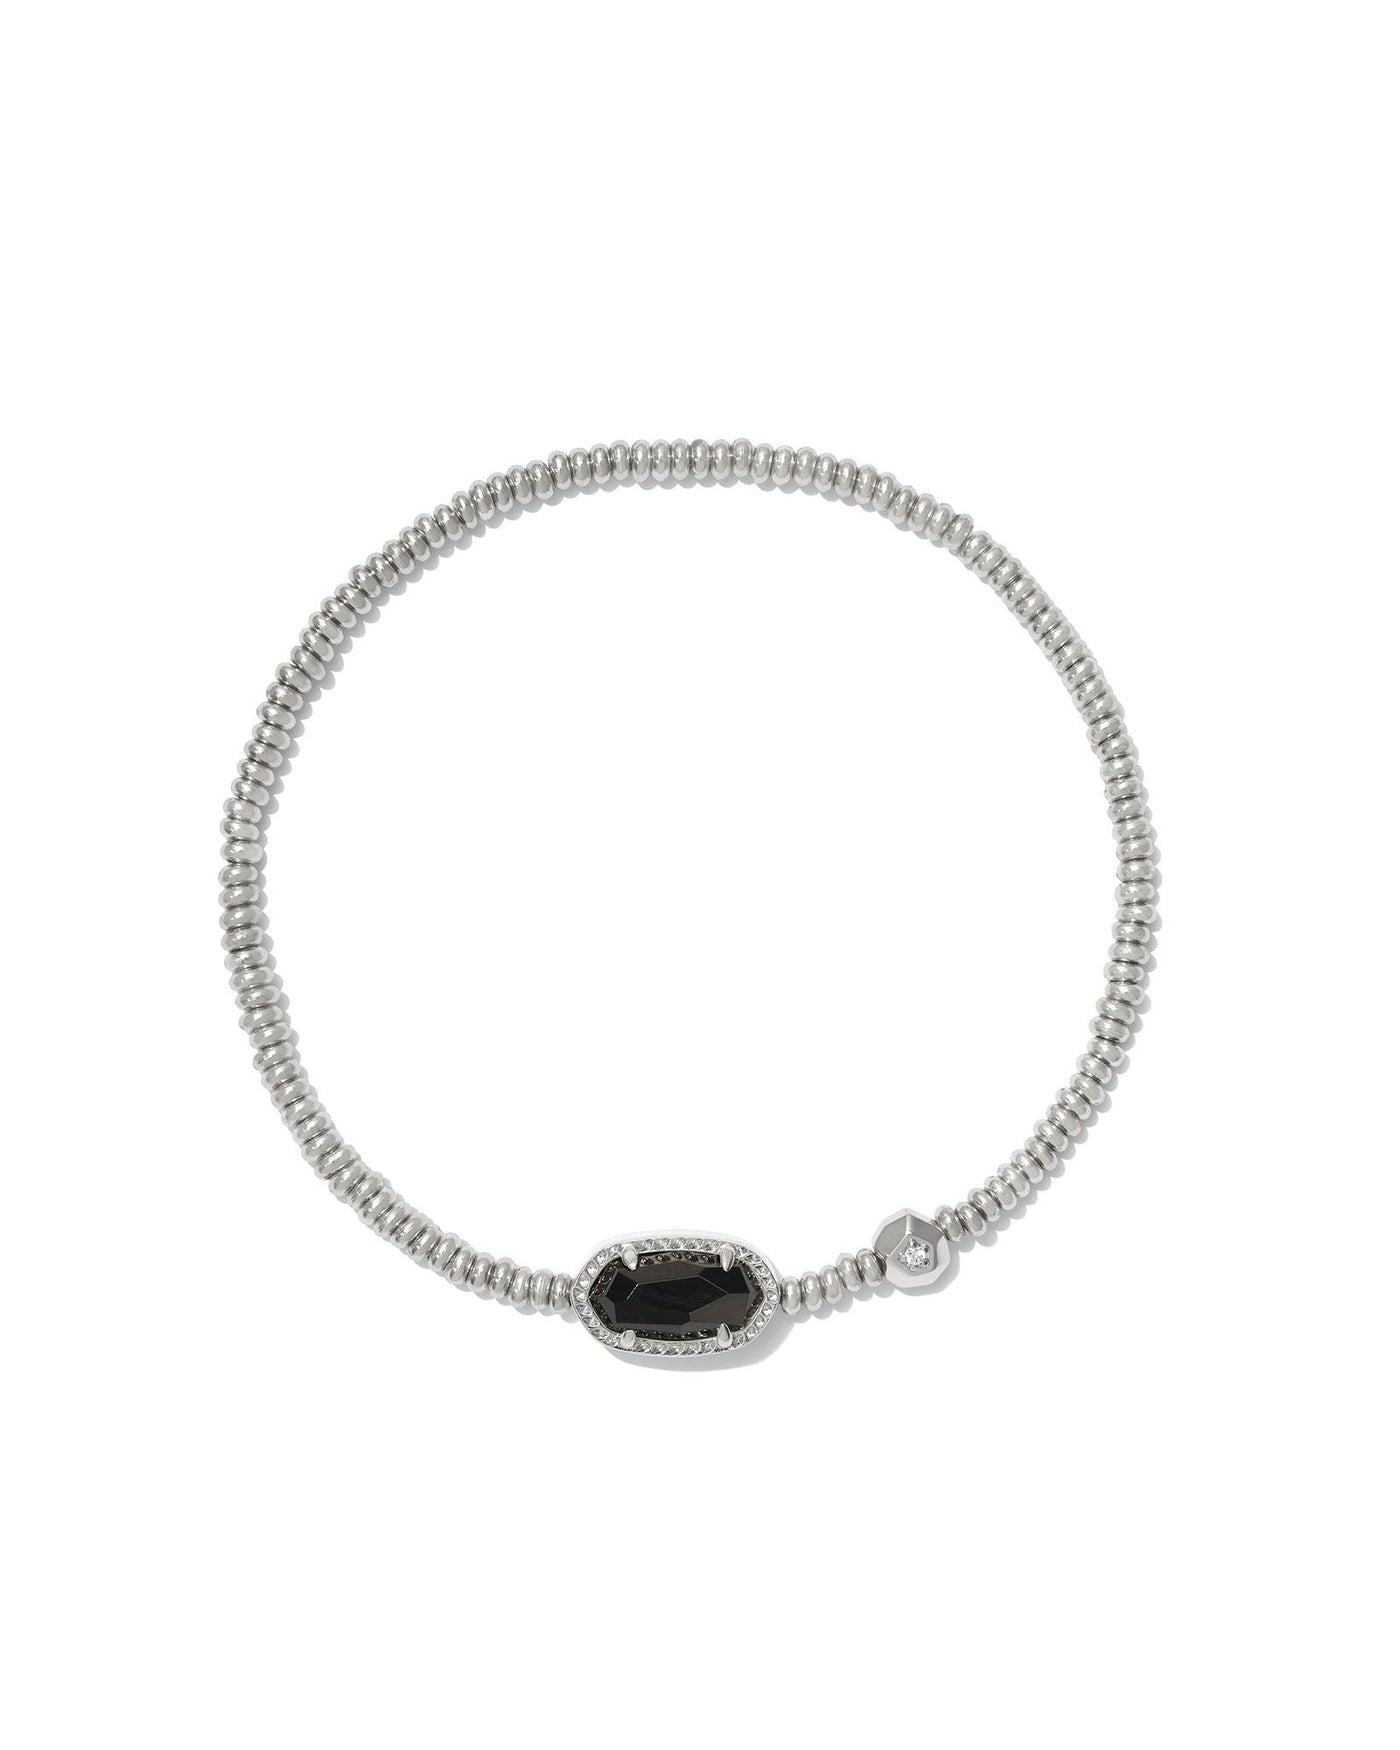 Kendra Scott Grayson Stretch Bracelet in Silver Black Agate on white background.